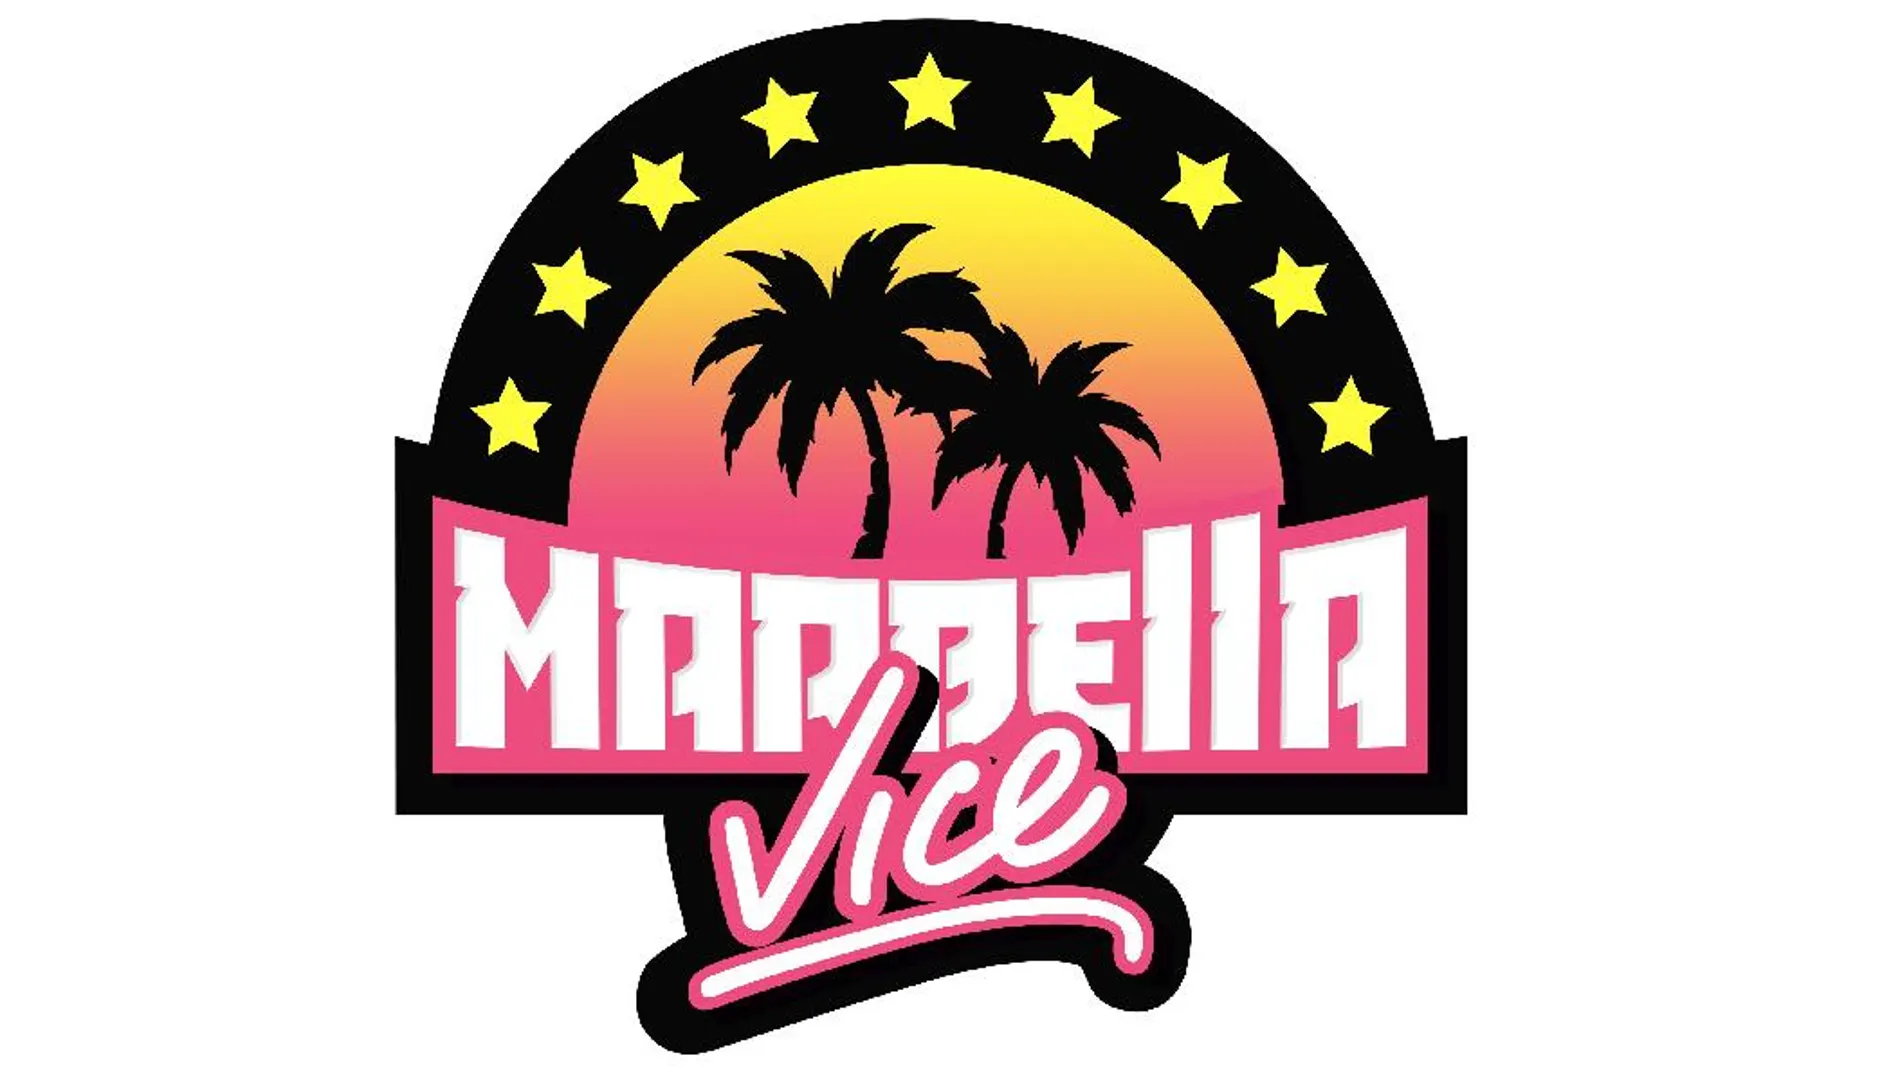 Logo Marbella Vice